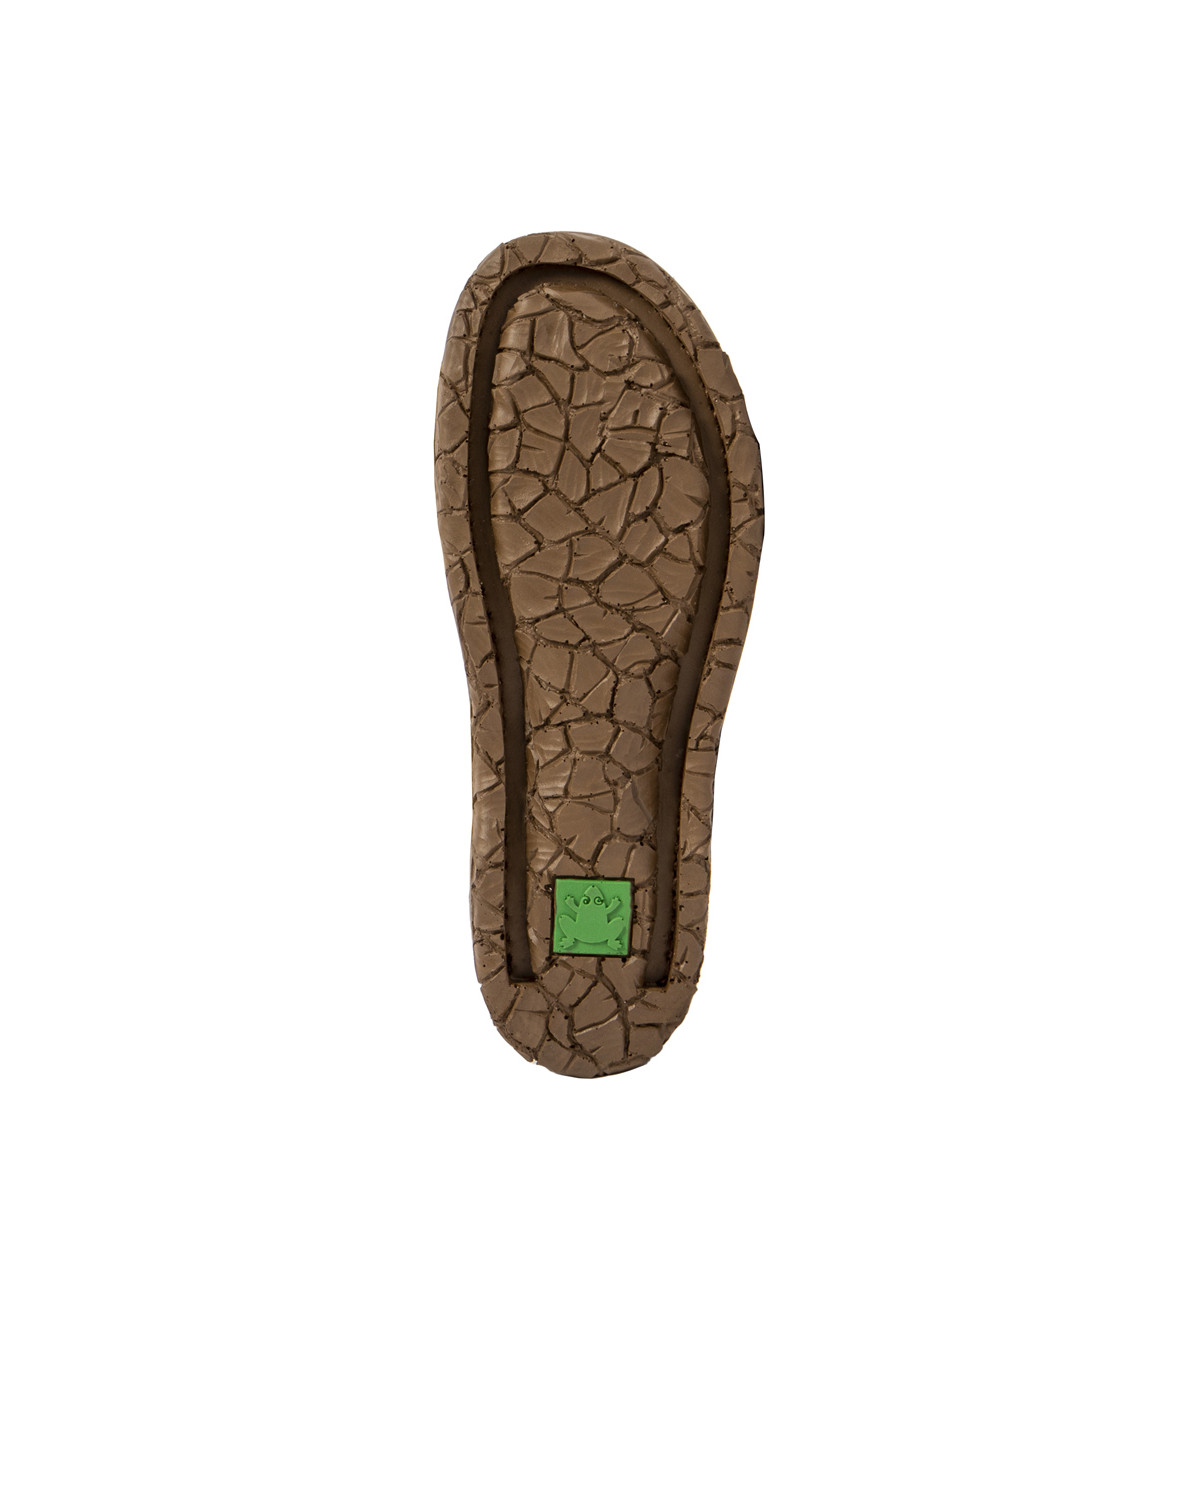 Sandales confortables plates en cuir à scratch et semelles ergonomiques - Vert - El naturalista